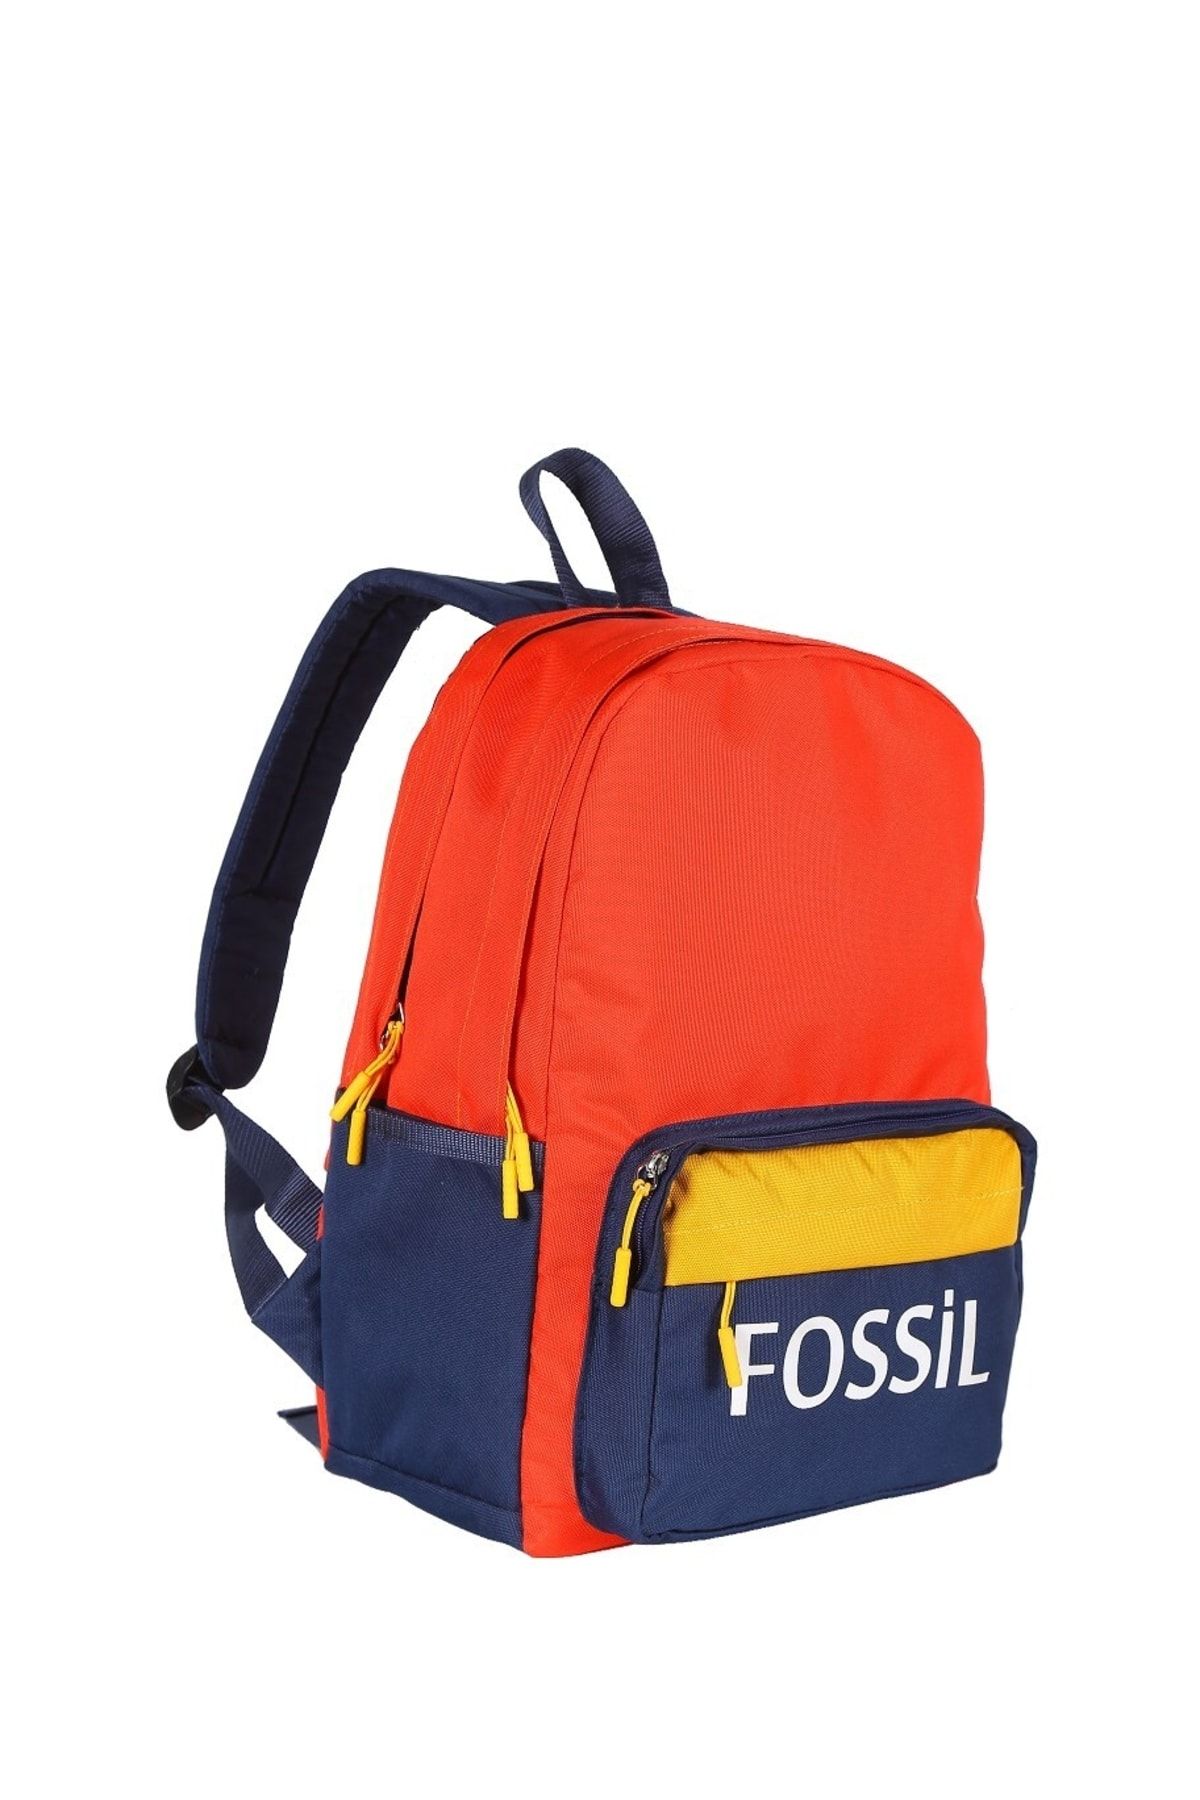 Fossil Renkli Okul Sırt Çantası-9504-02